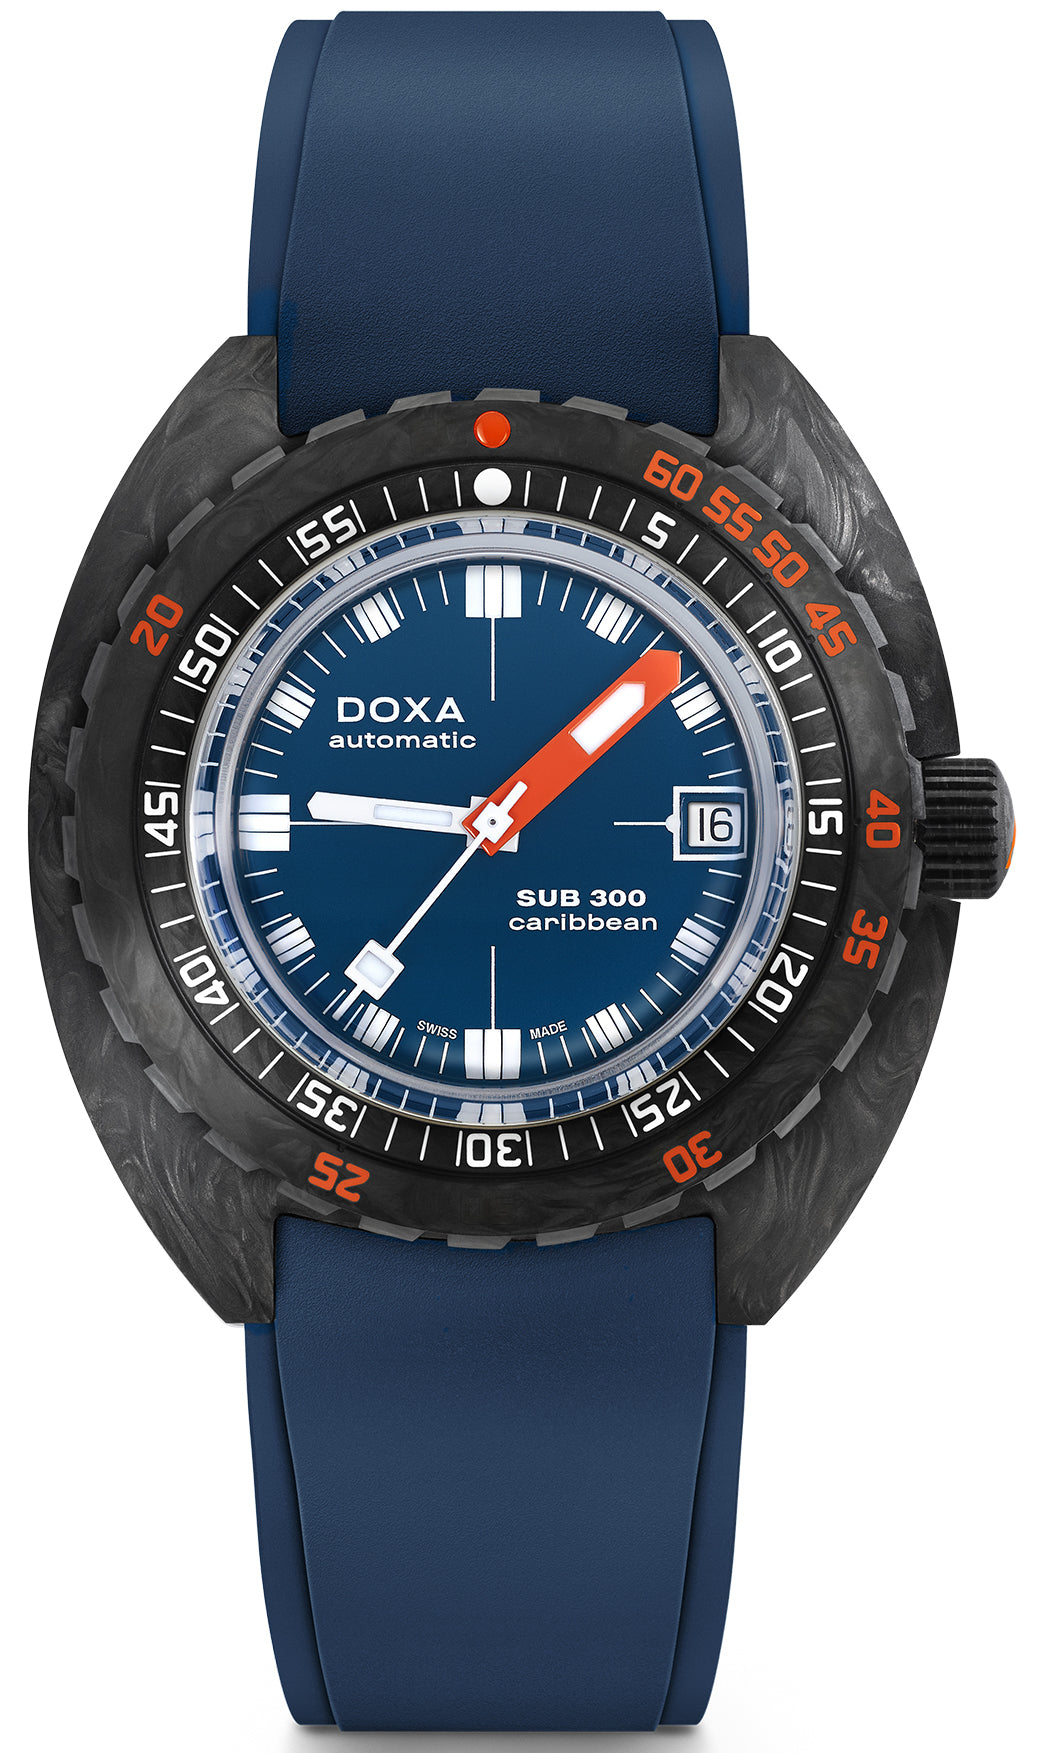 Photos - Wrist Watch DOXA Watch SUB 300 Carbon COSC Caribbean Rubber - Blue DOX-024 